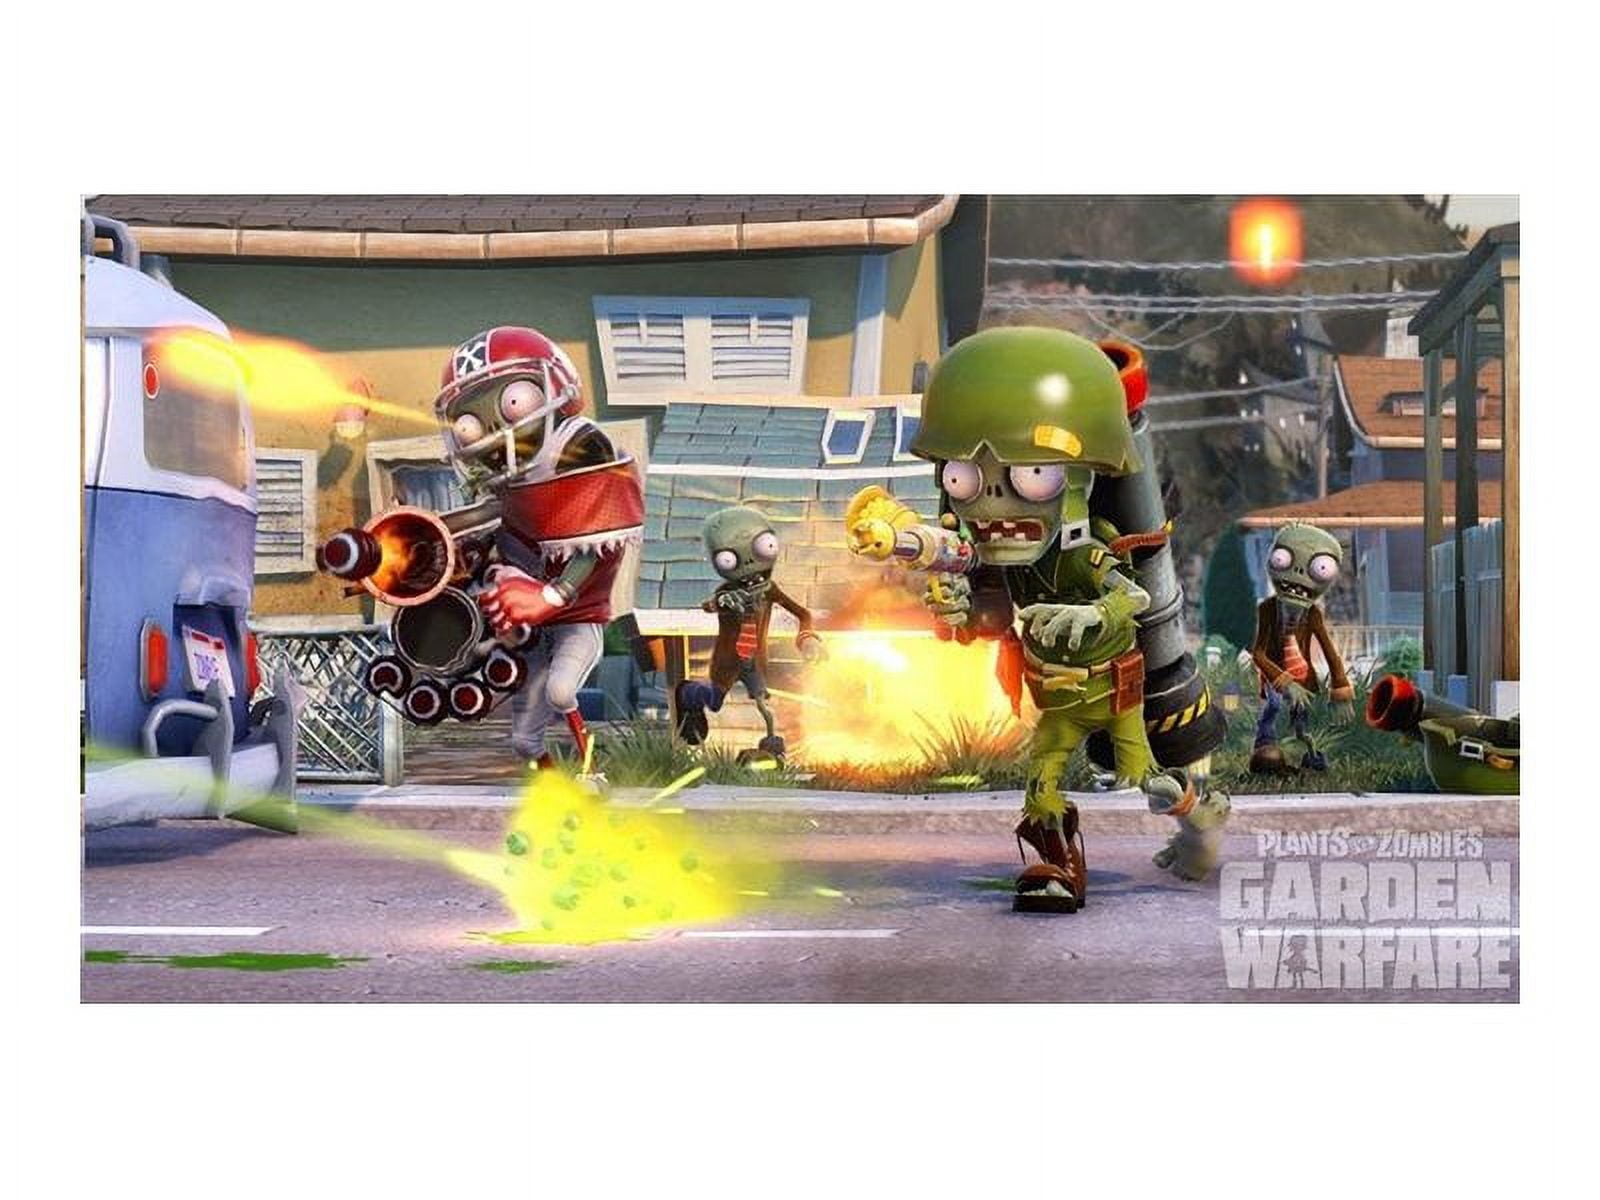 Plants vs. Zombies: Garden Warfare - Xbox One – Retro Raven Games